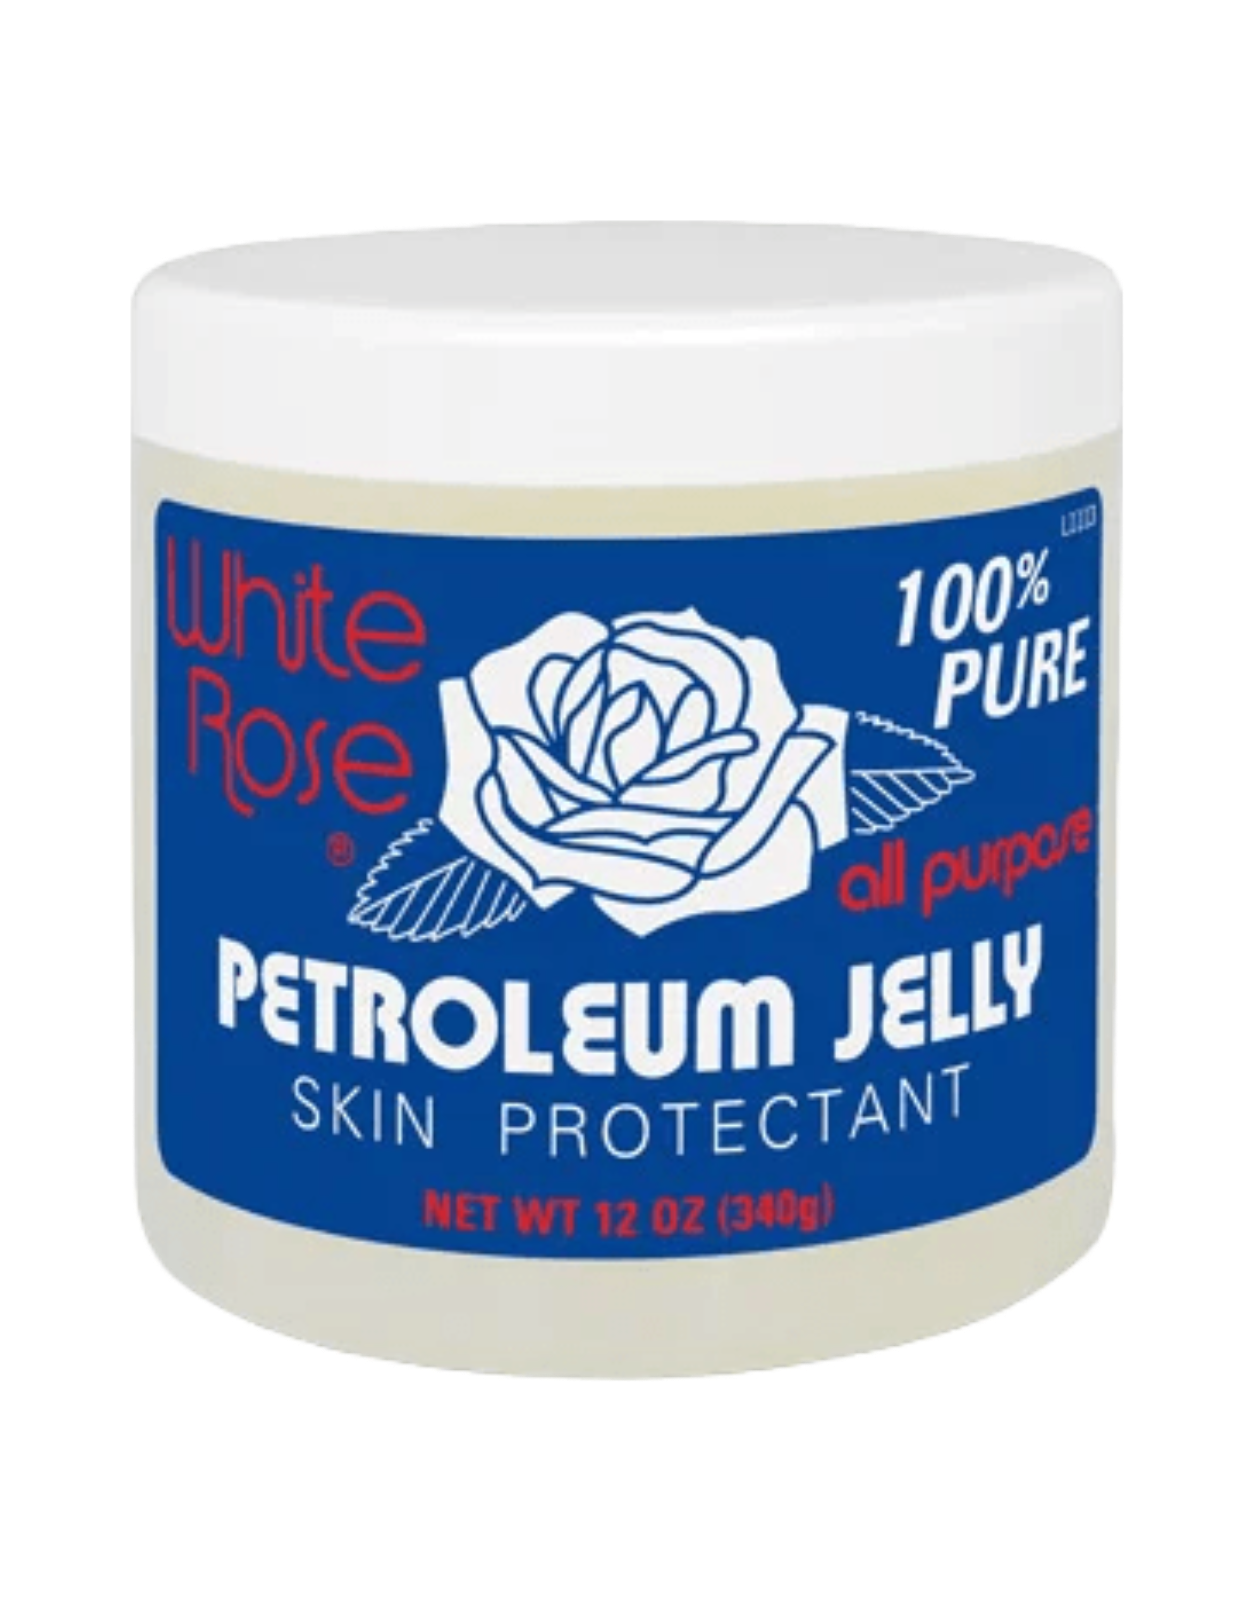 White Rose - Petroleum Jelly Skin Protectant